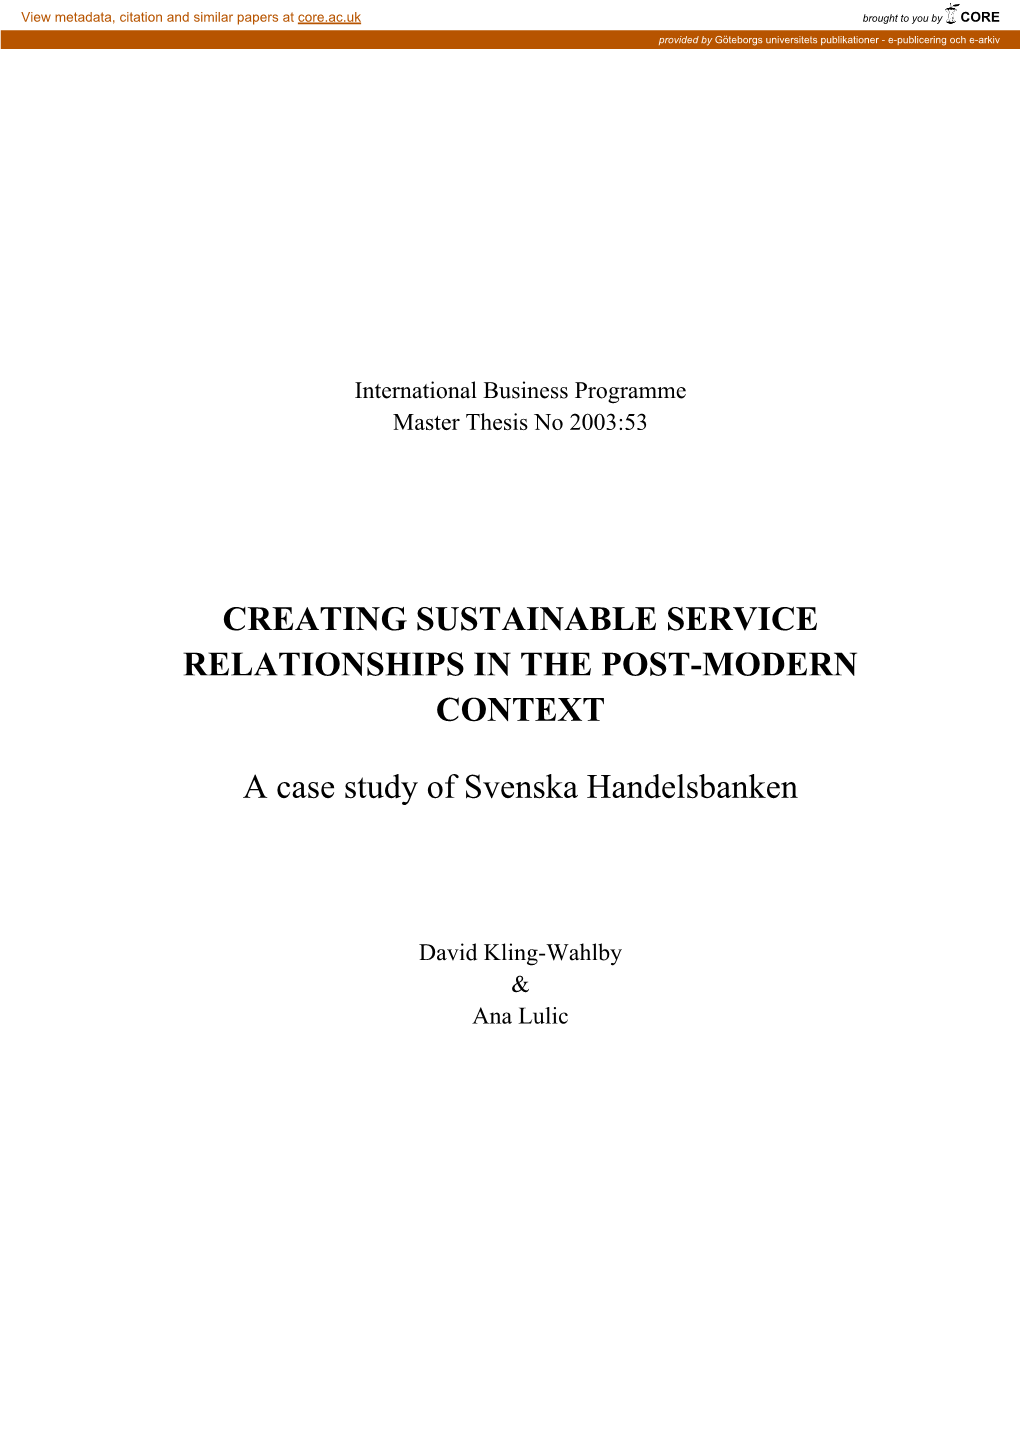 CREATING SUSTAINABLE SERVICE RELATIONSHIPS in the POST-MODERN CONTEXT a Case Study of Svenska Handelsbanken